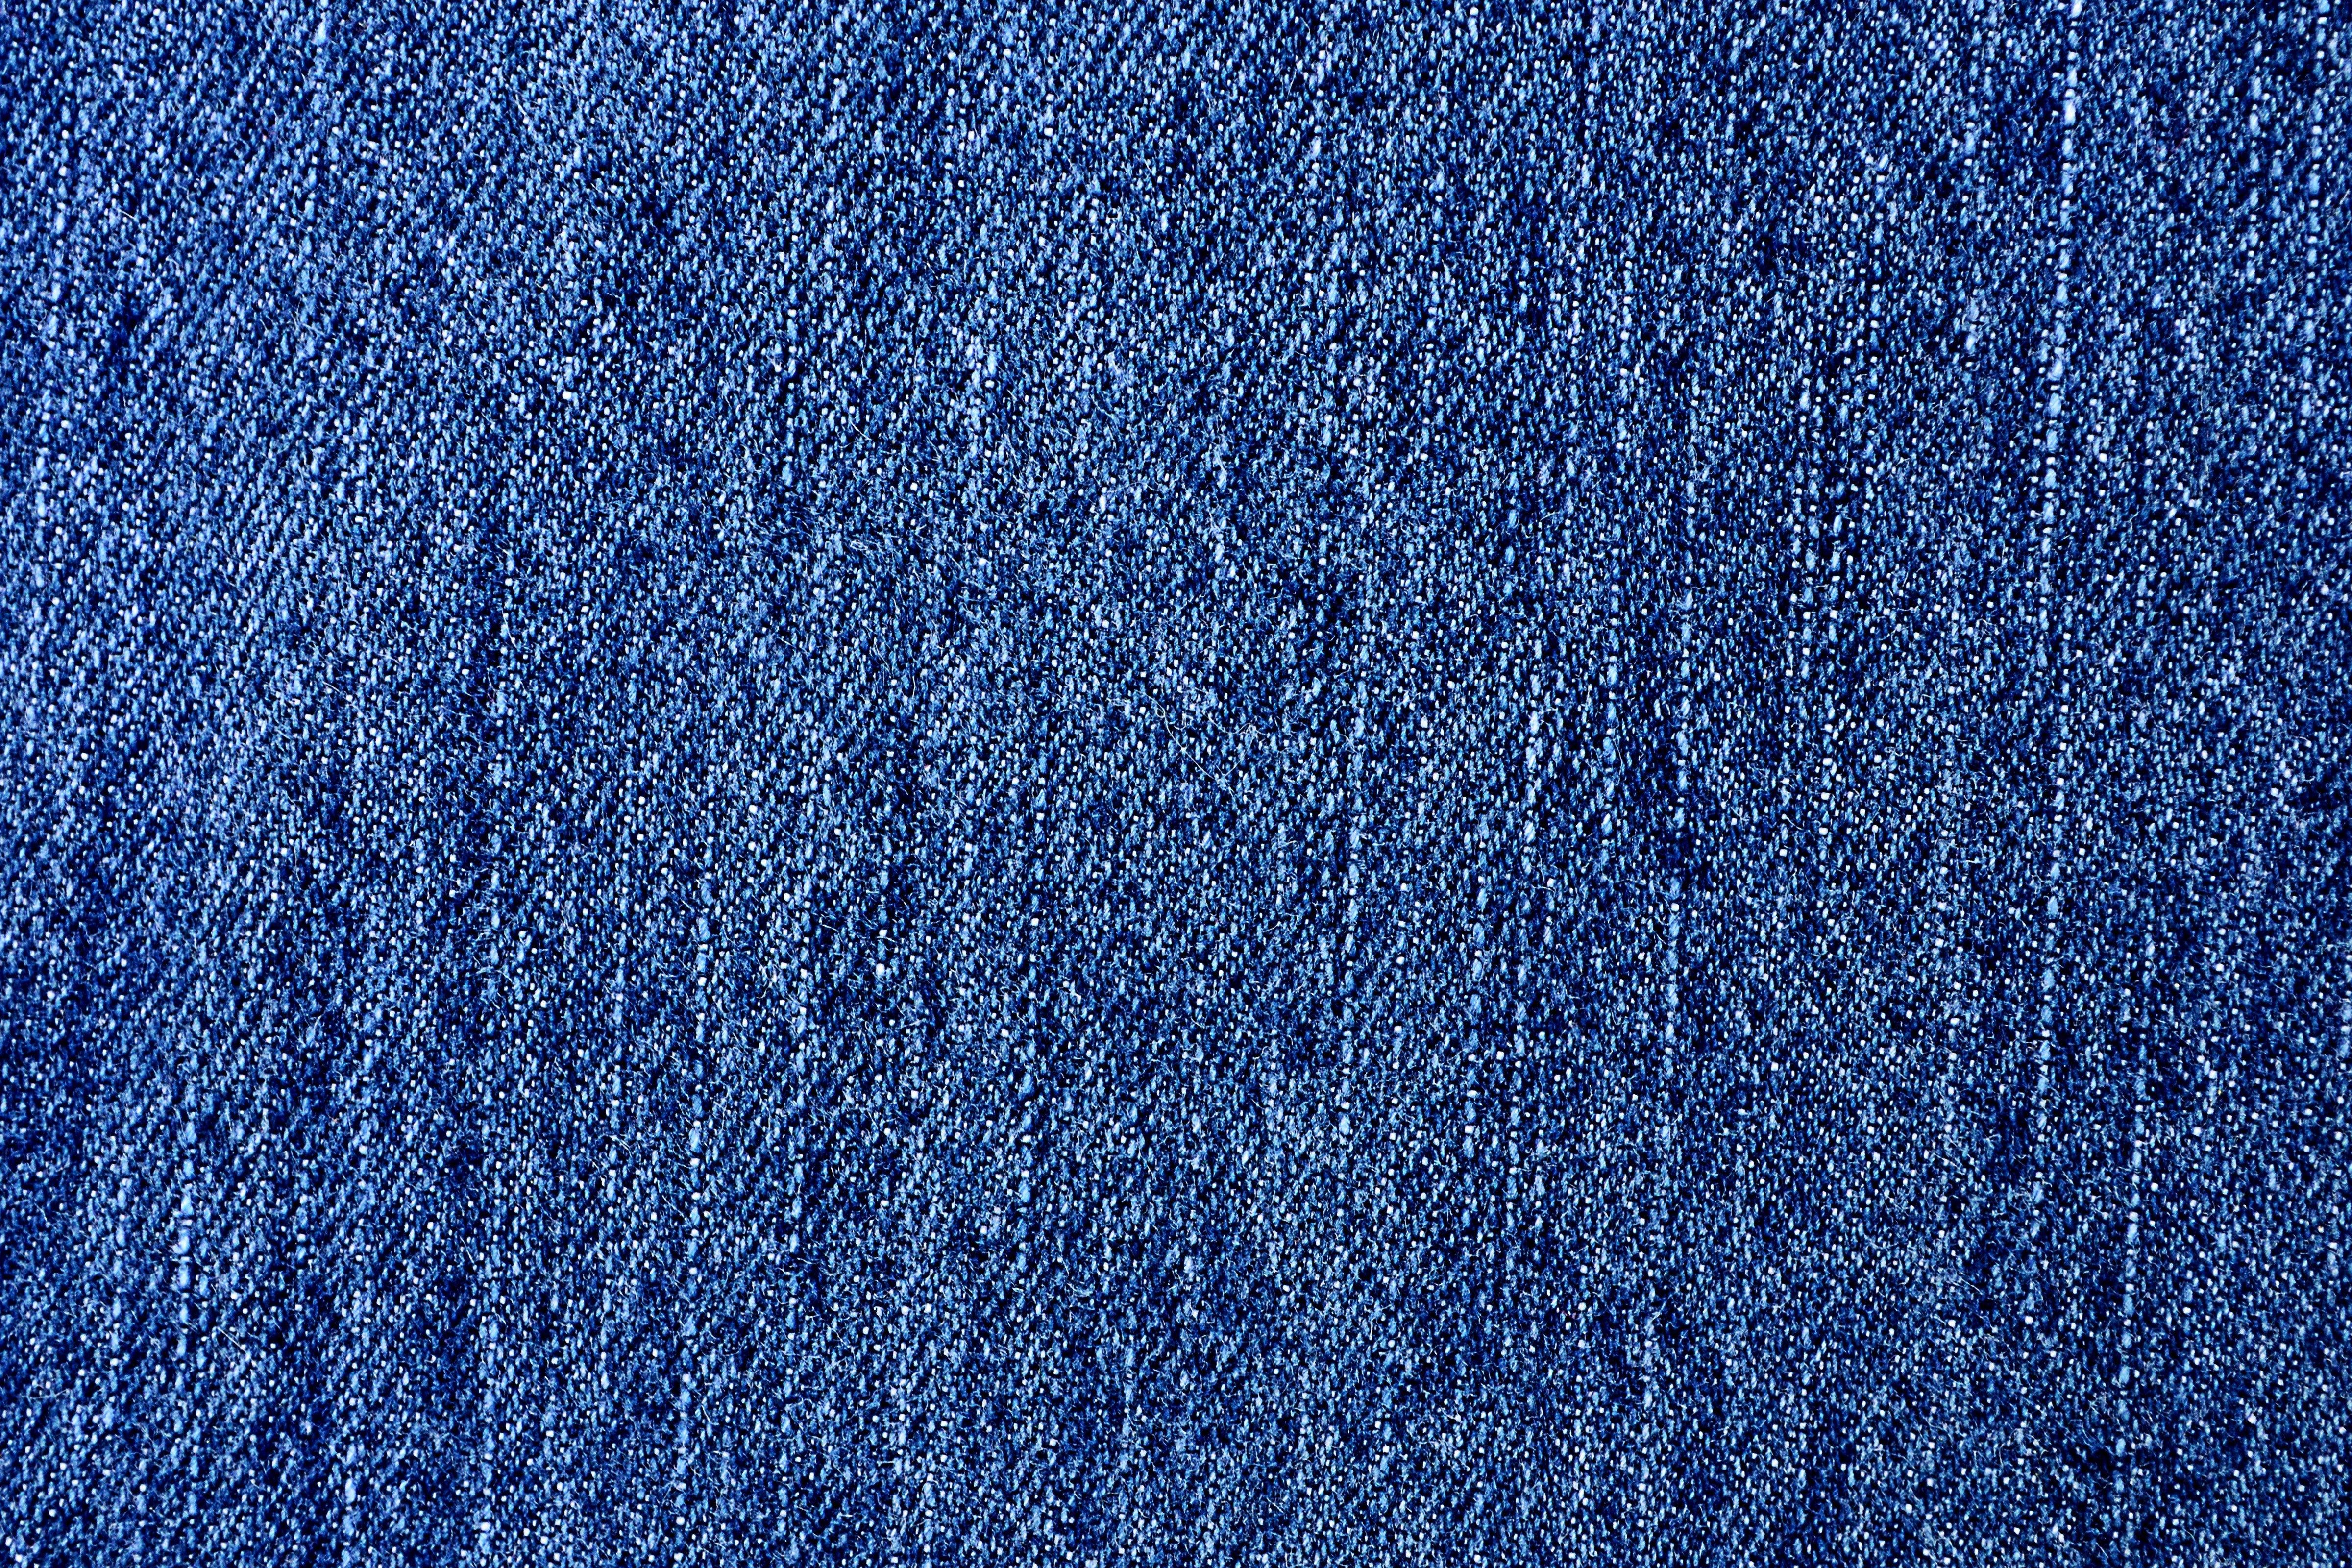 Denim Jeans Wallpapers